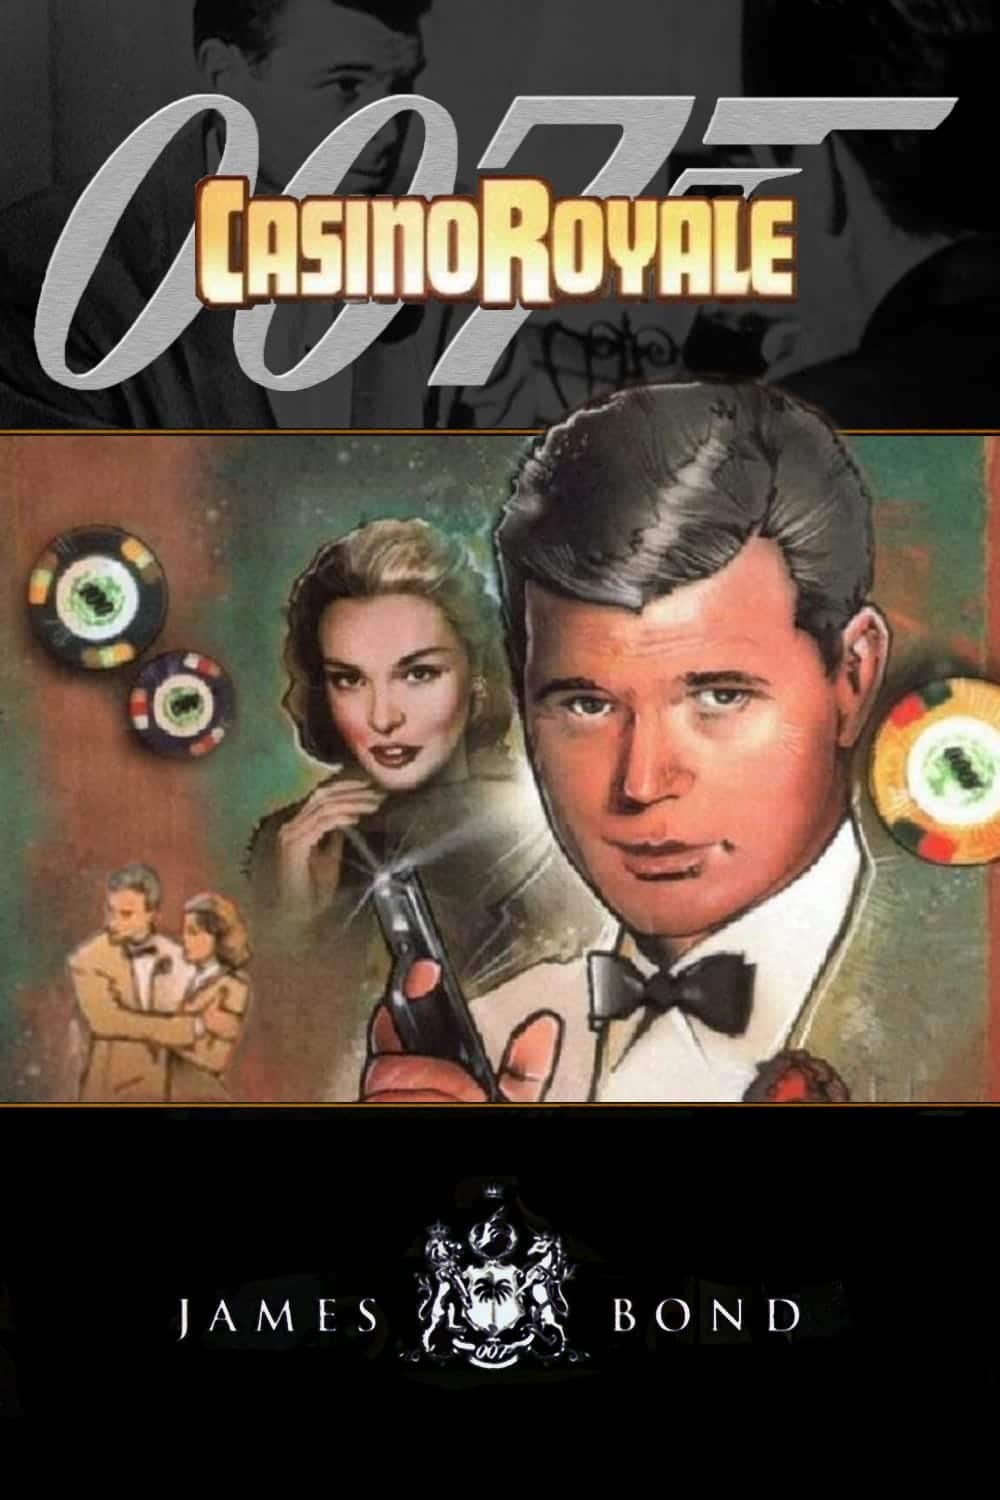 Plakat von "Casino Royale"